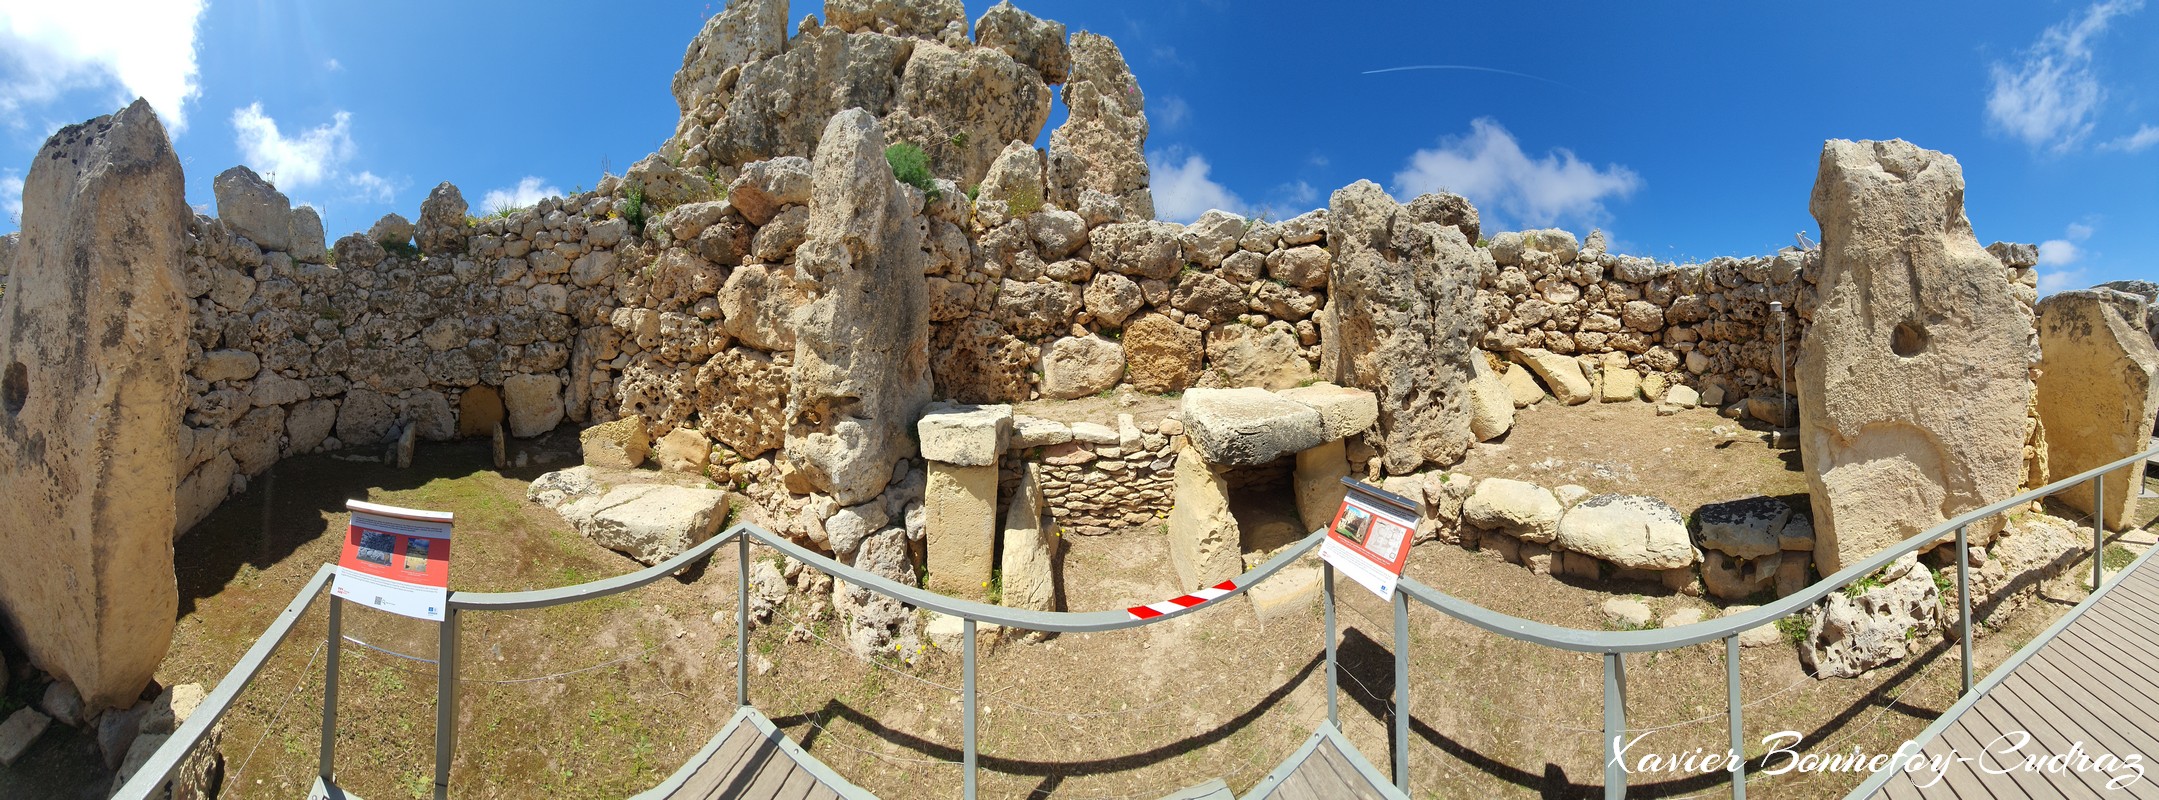 Gozo - Xaghra - Ggantija Neolithic Temple
Mots-clés: geo:lat=36.04737599 geo:lon=14.26901266 geotagged Ix-Xagħra Malte MLT Xagħra Malta Gozo Xaghra Ggantija Neolithic Temple patrimoine unesco ruines neolithiques